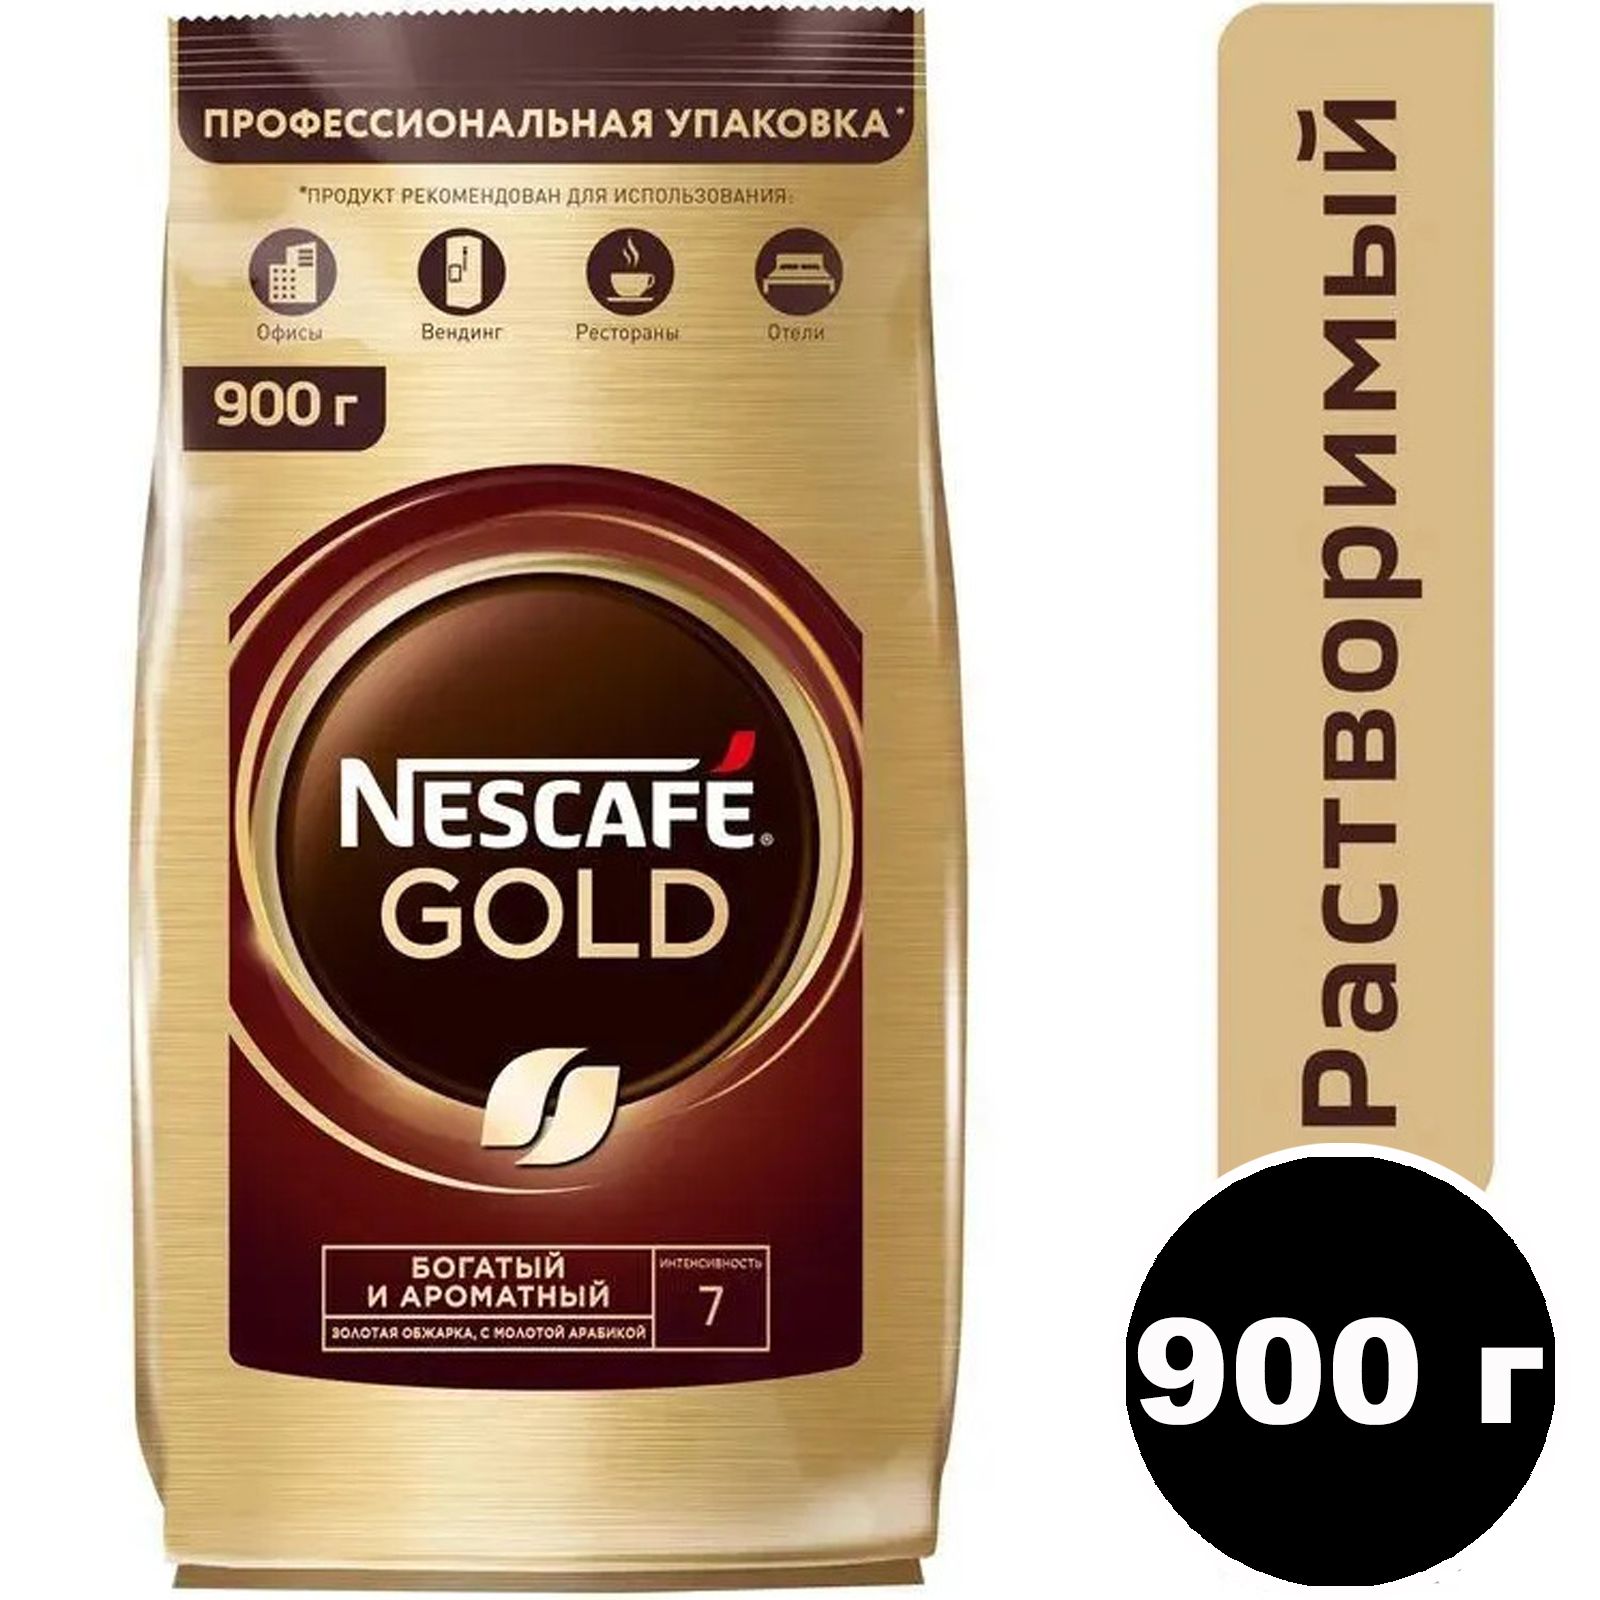 Nescafe gold пакет. Nescafe кофе Gold 900г.. Нескафе Голд 750 гр. Кофе Нескафе Голд 750 гр. Кофе растворимый Нескафе Голд 900 гр.